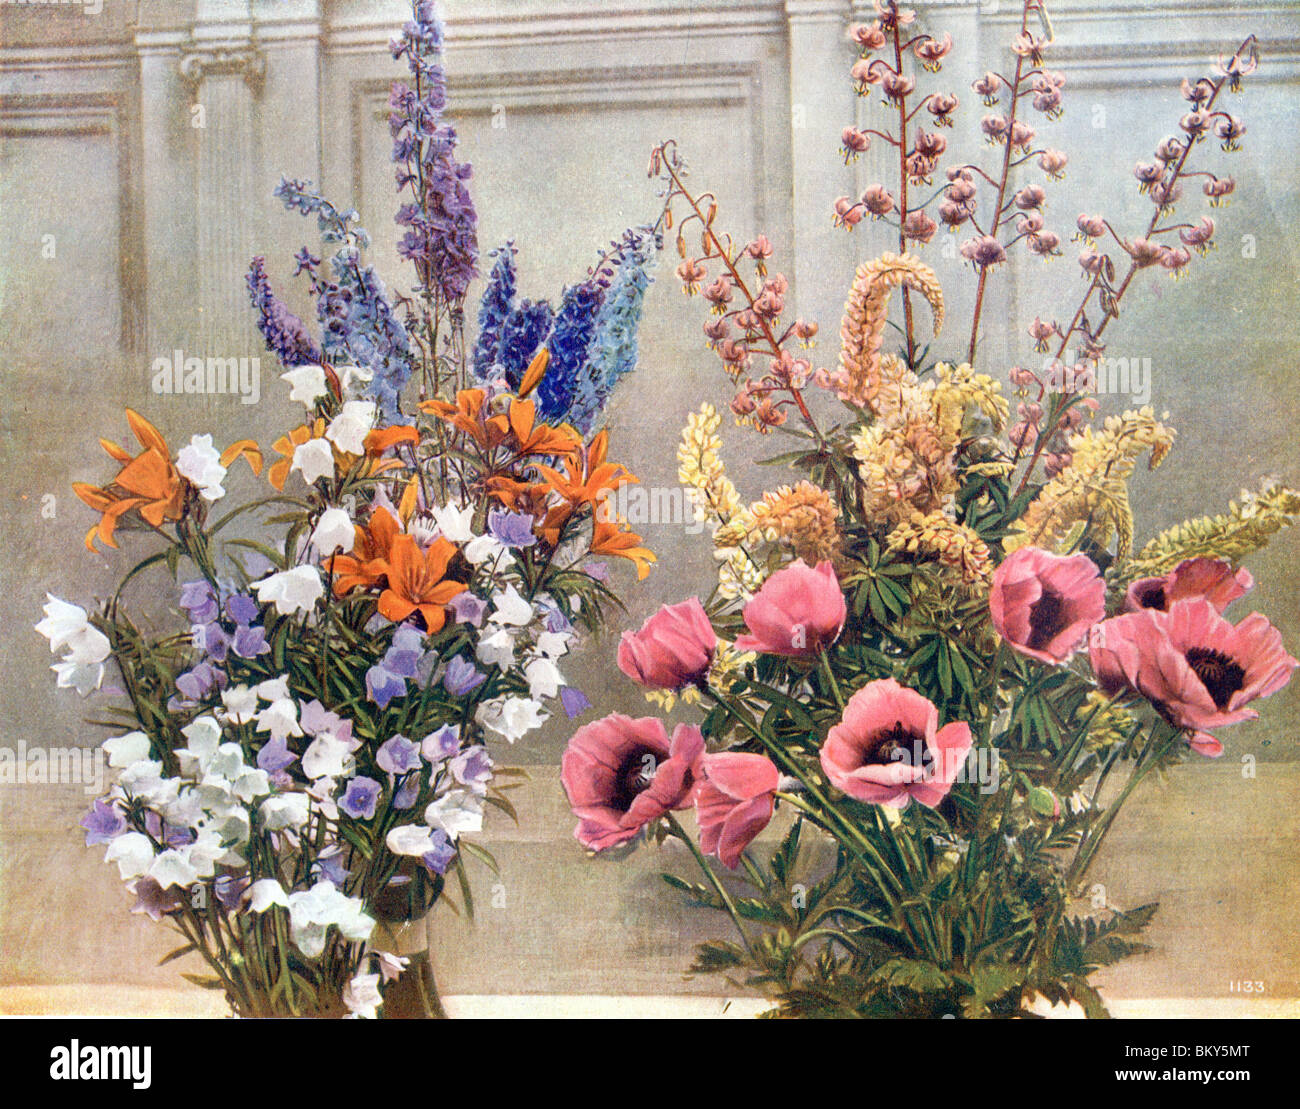 Exhibit of Hardy Perennials Stock Photo